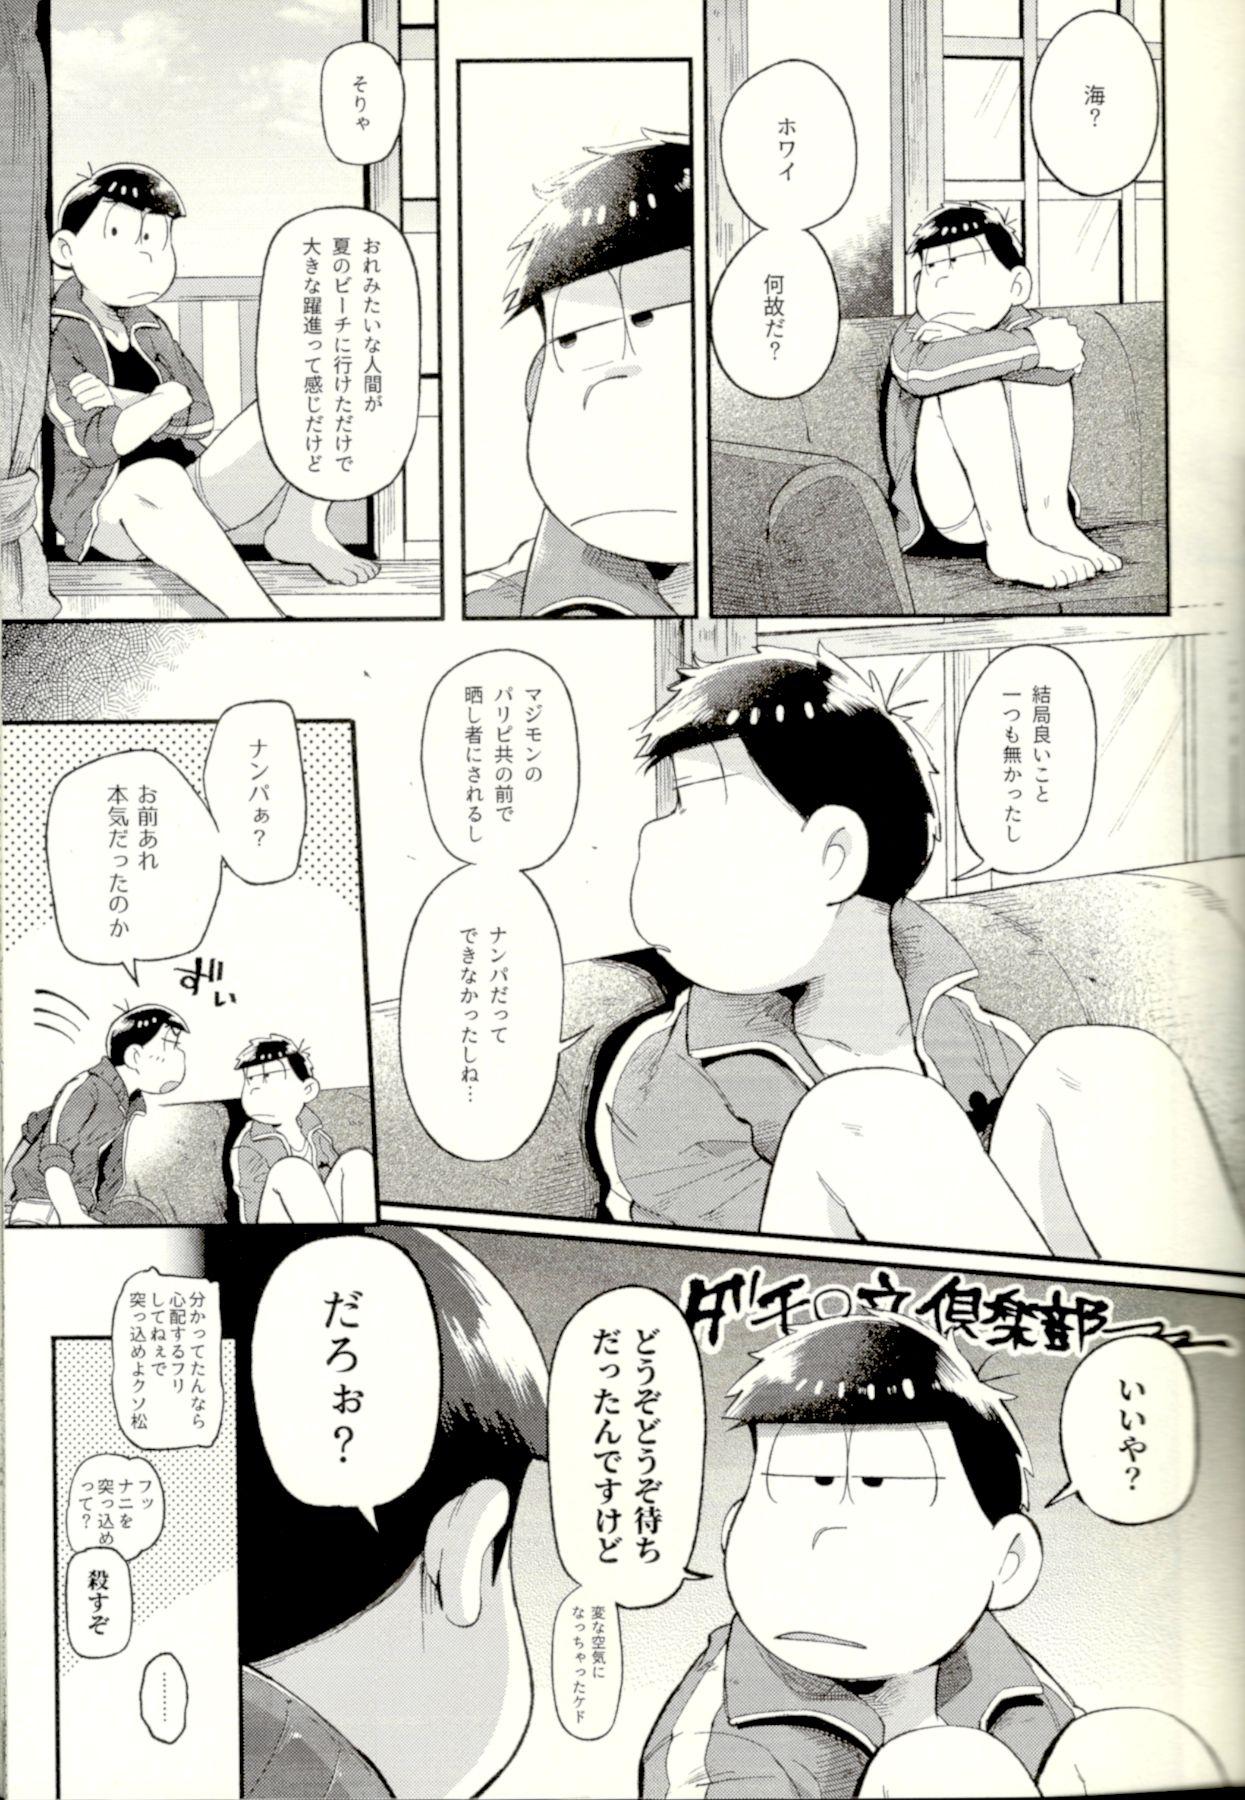 Japanese Season in the Summer - Osomatsu-san Real Couple - Page 7